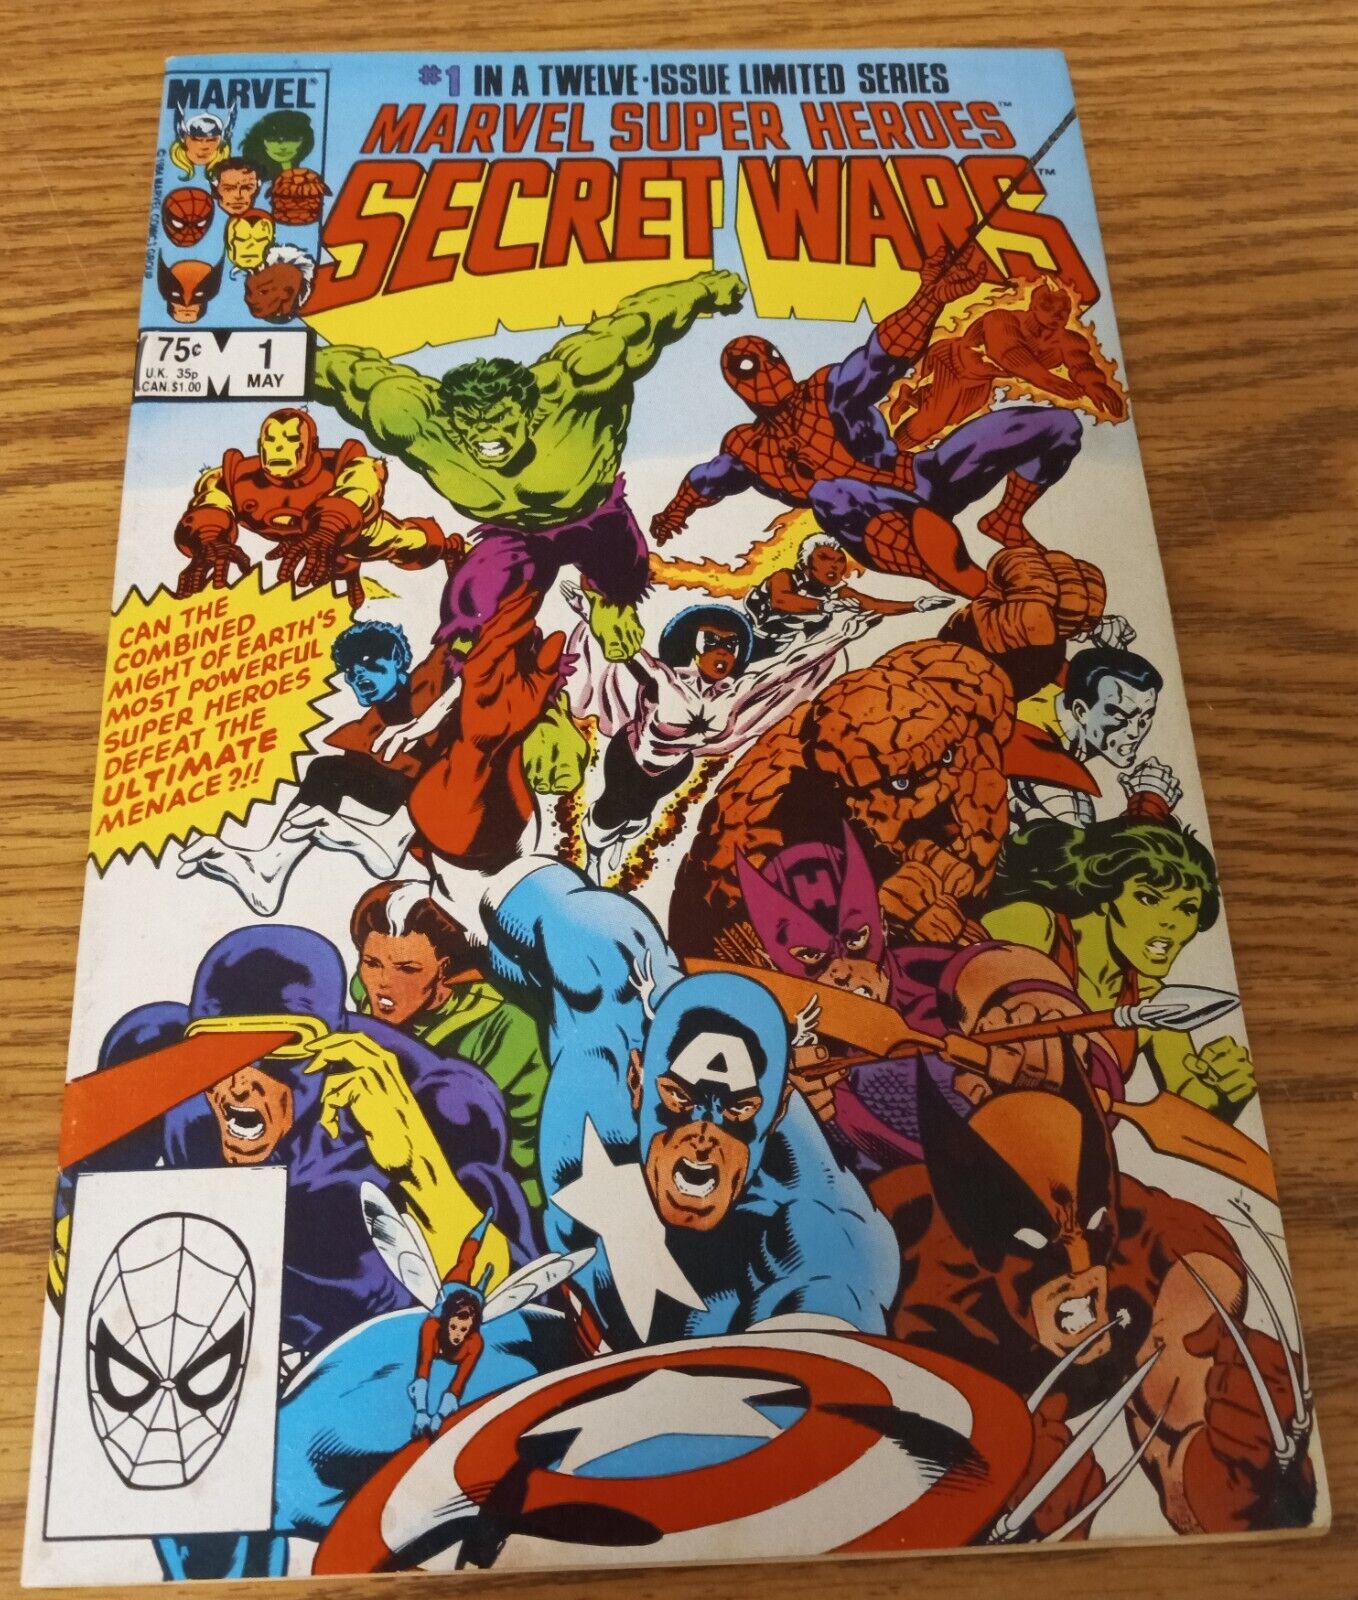 Marvel Super Heroes Secret Wars (1984) #1-12 read description